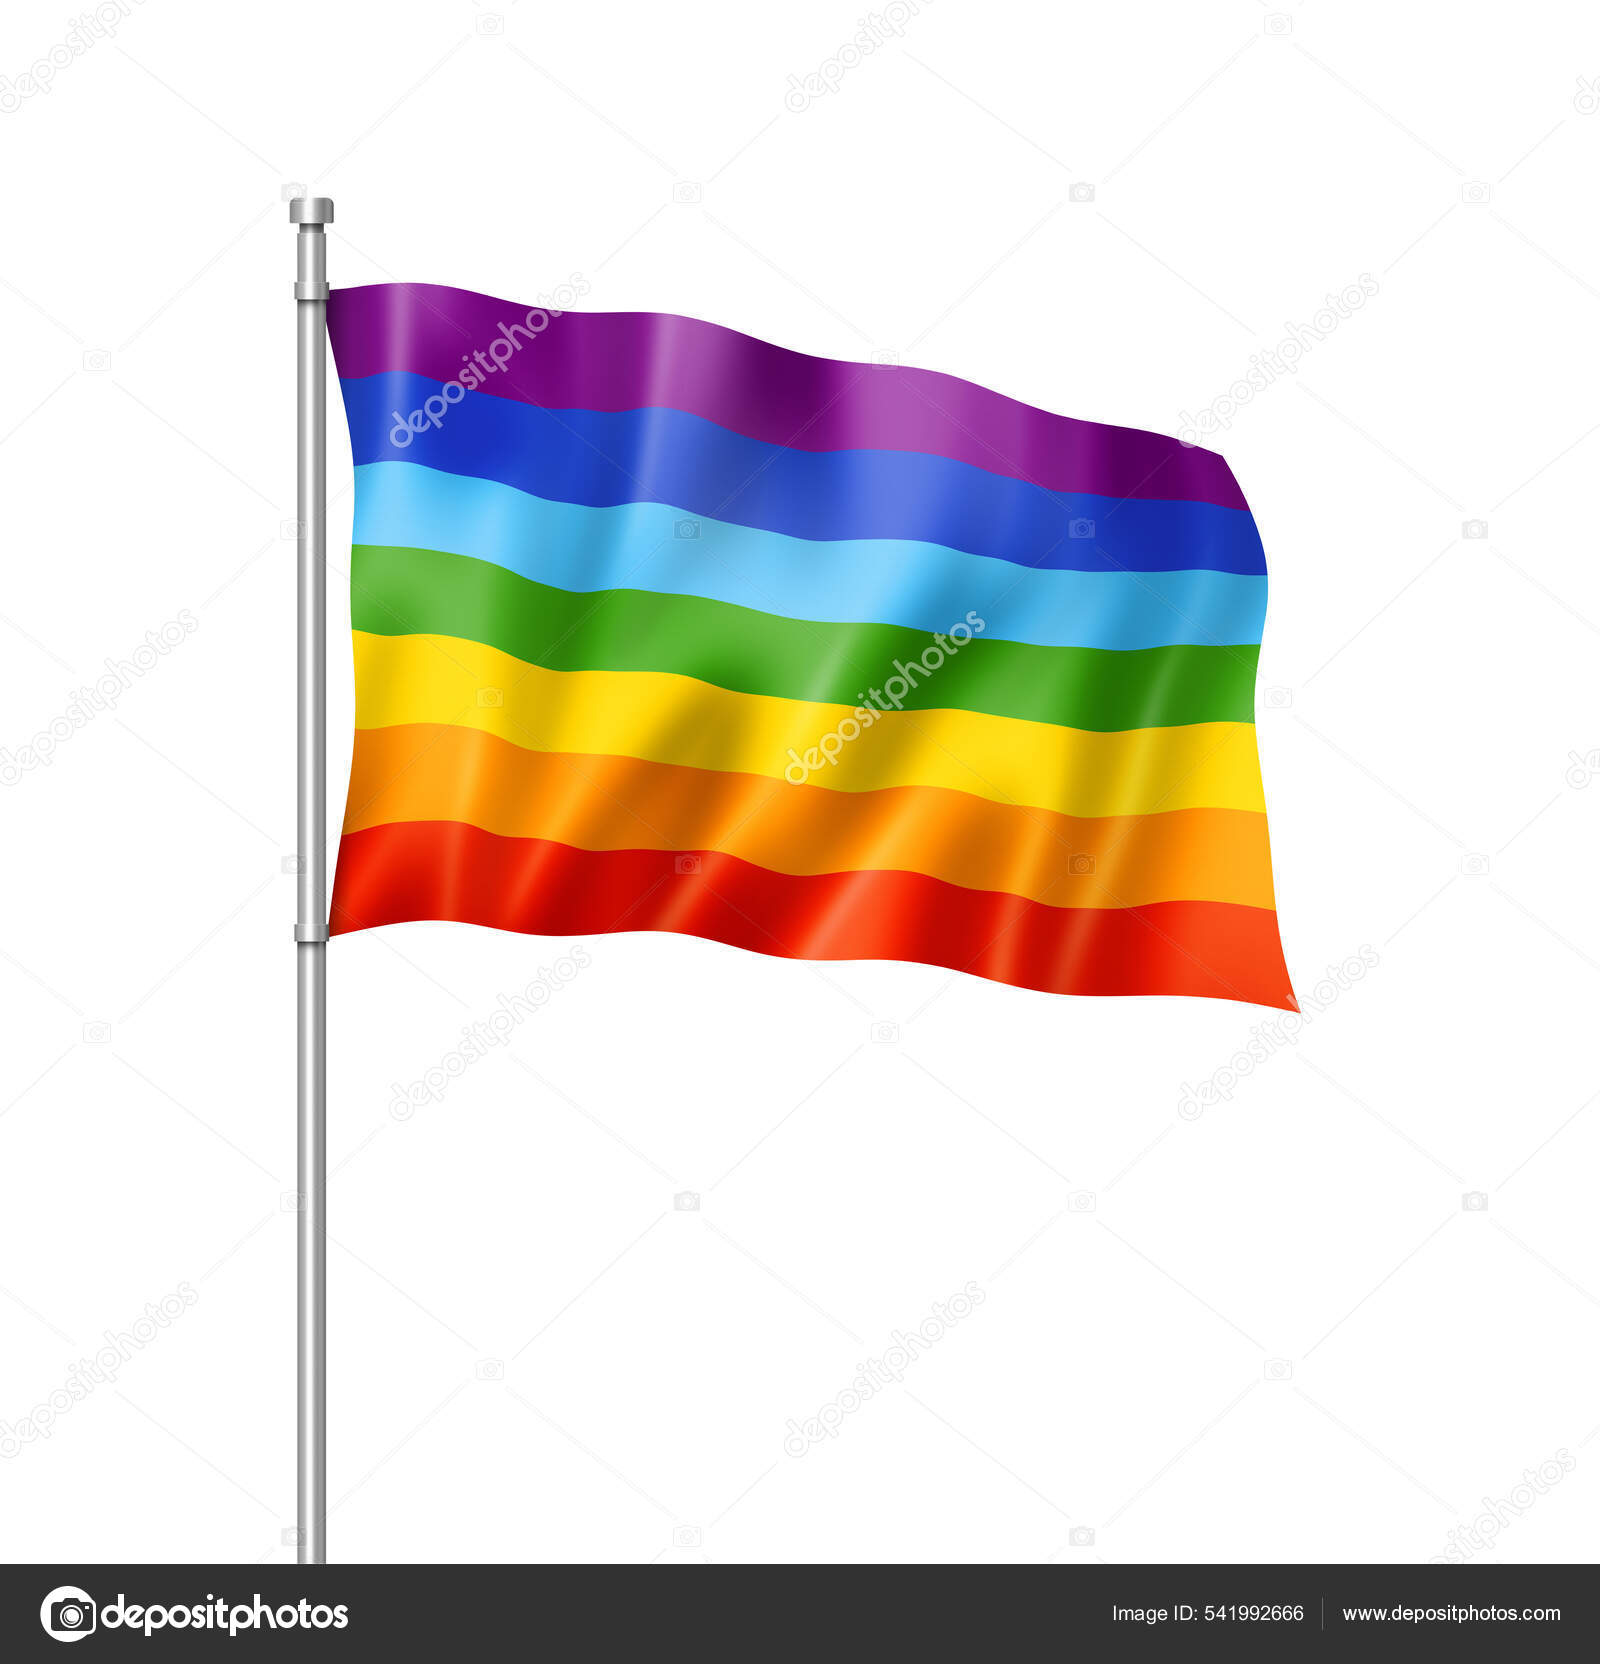 https://st.depositphotos.com/1006269/54199/i/1600/depositphotos_541992666-stock-photo-rainbow-peace-flag-three-dimensional.jpg